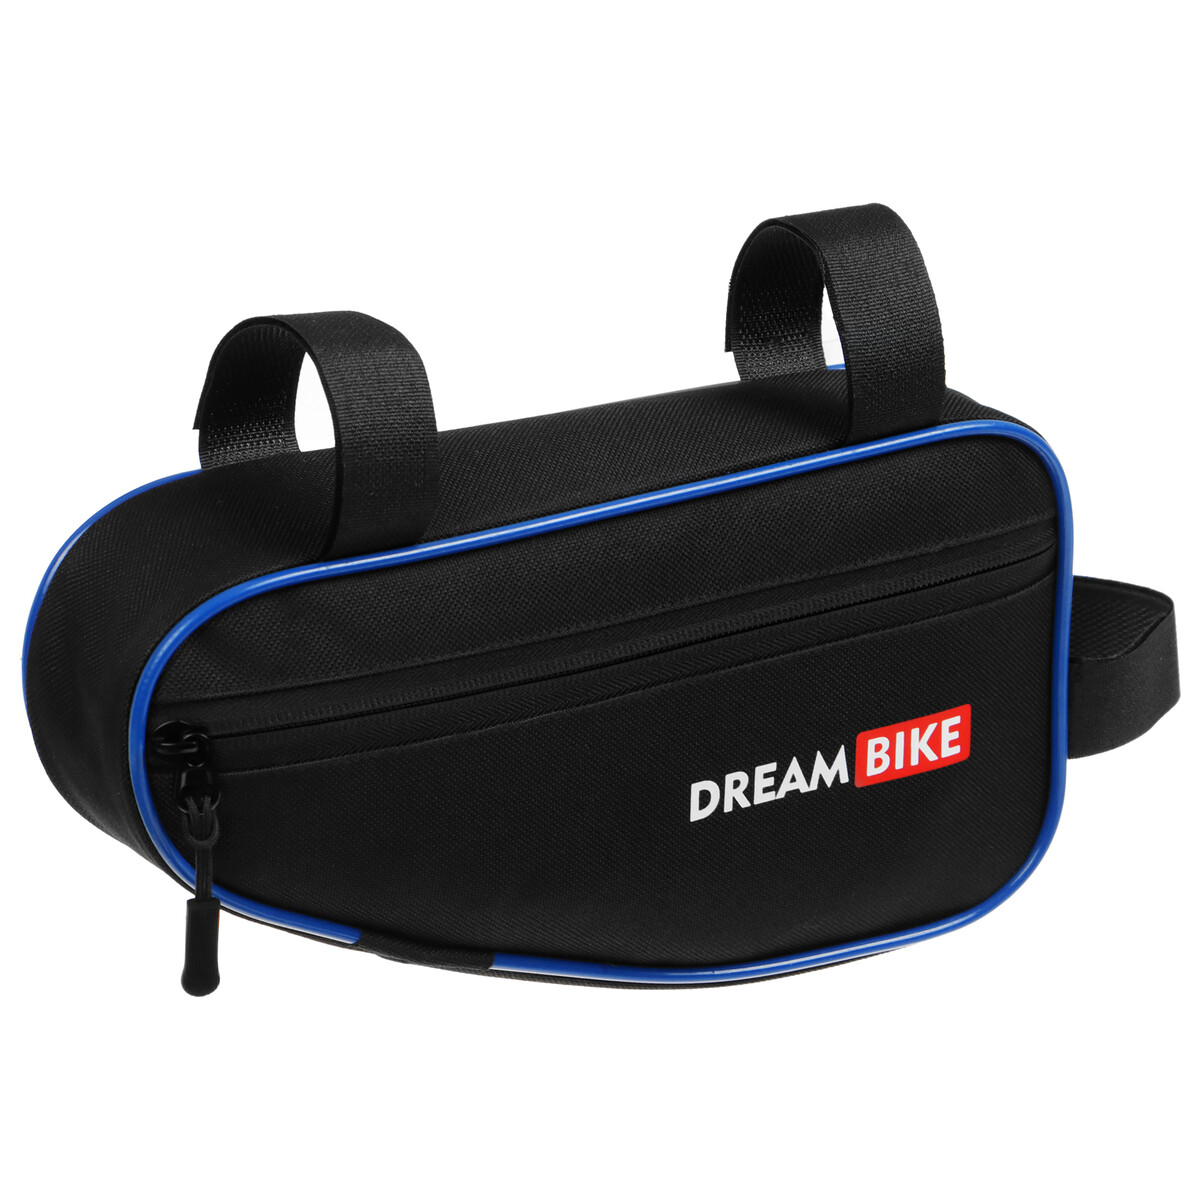 Велосумка dream bike под раму, 26х13.5х5, цвет черный/синий